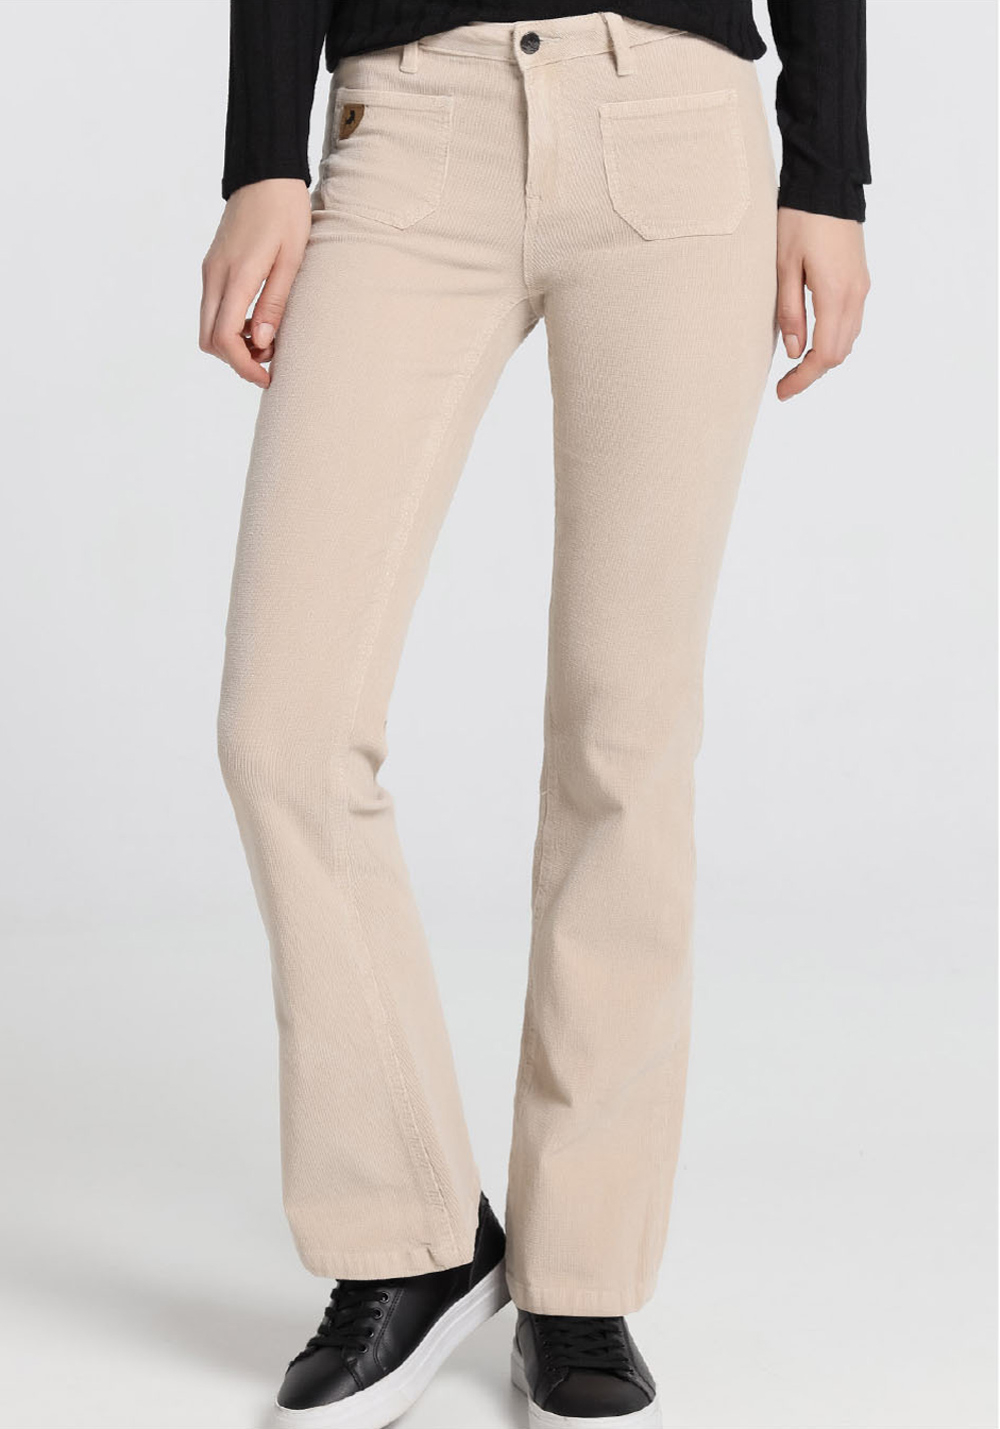 Lois pantalons texans de vellut de dona Ágata flare 20142/507 blanc trencat